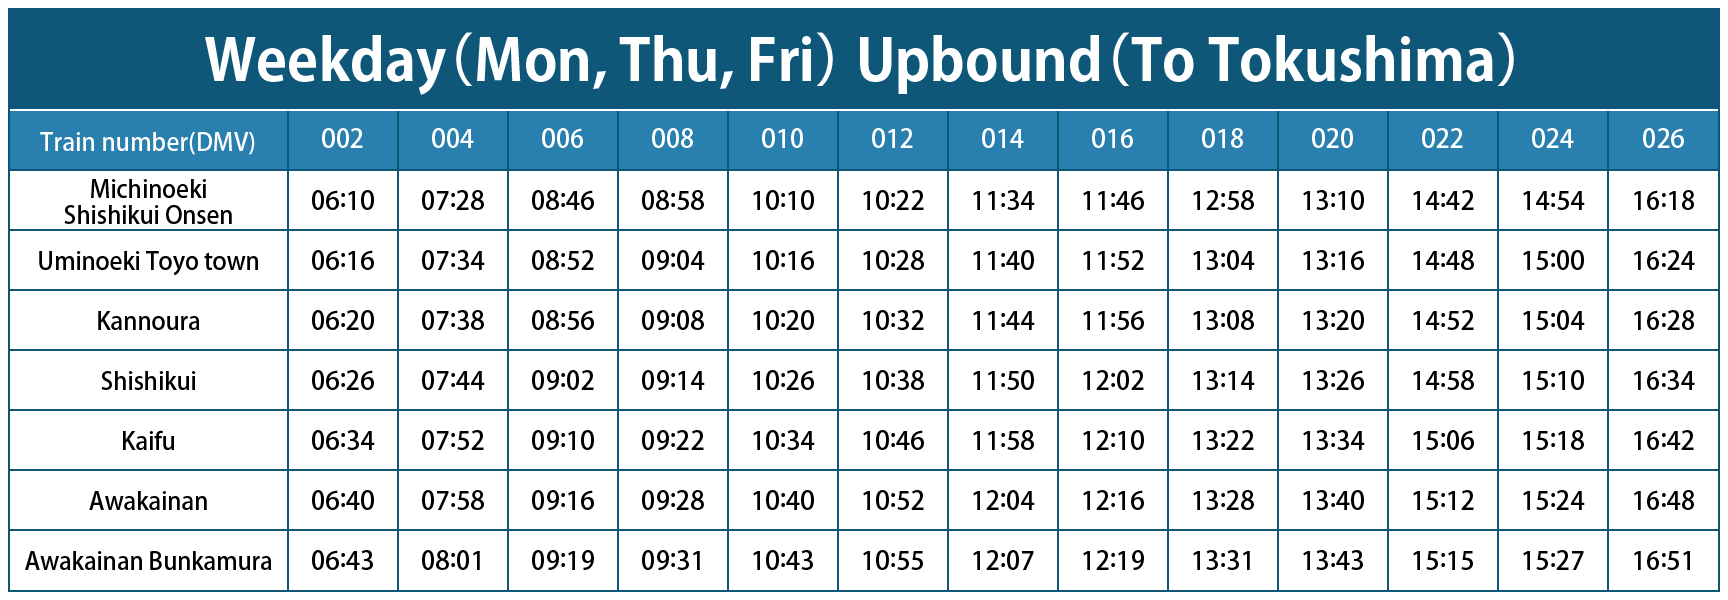 Timetable Weekday (Mon, Thu, Fri) Upbound (To Tokushima)